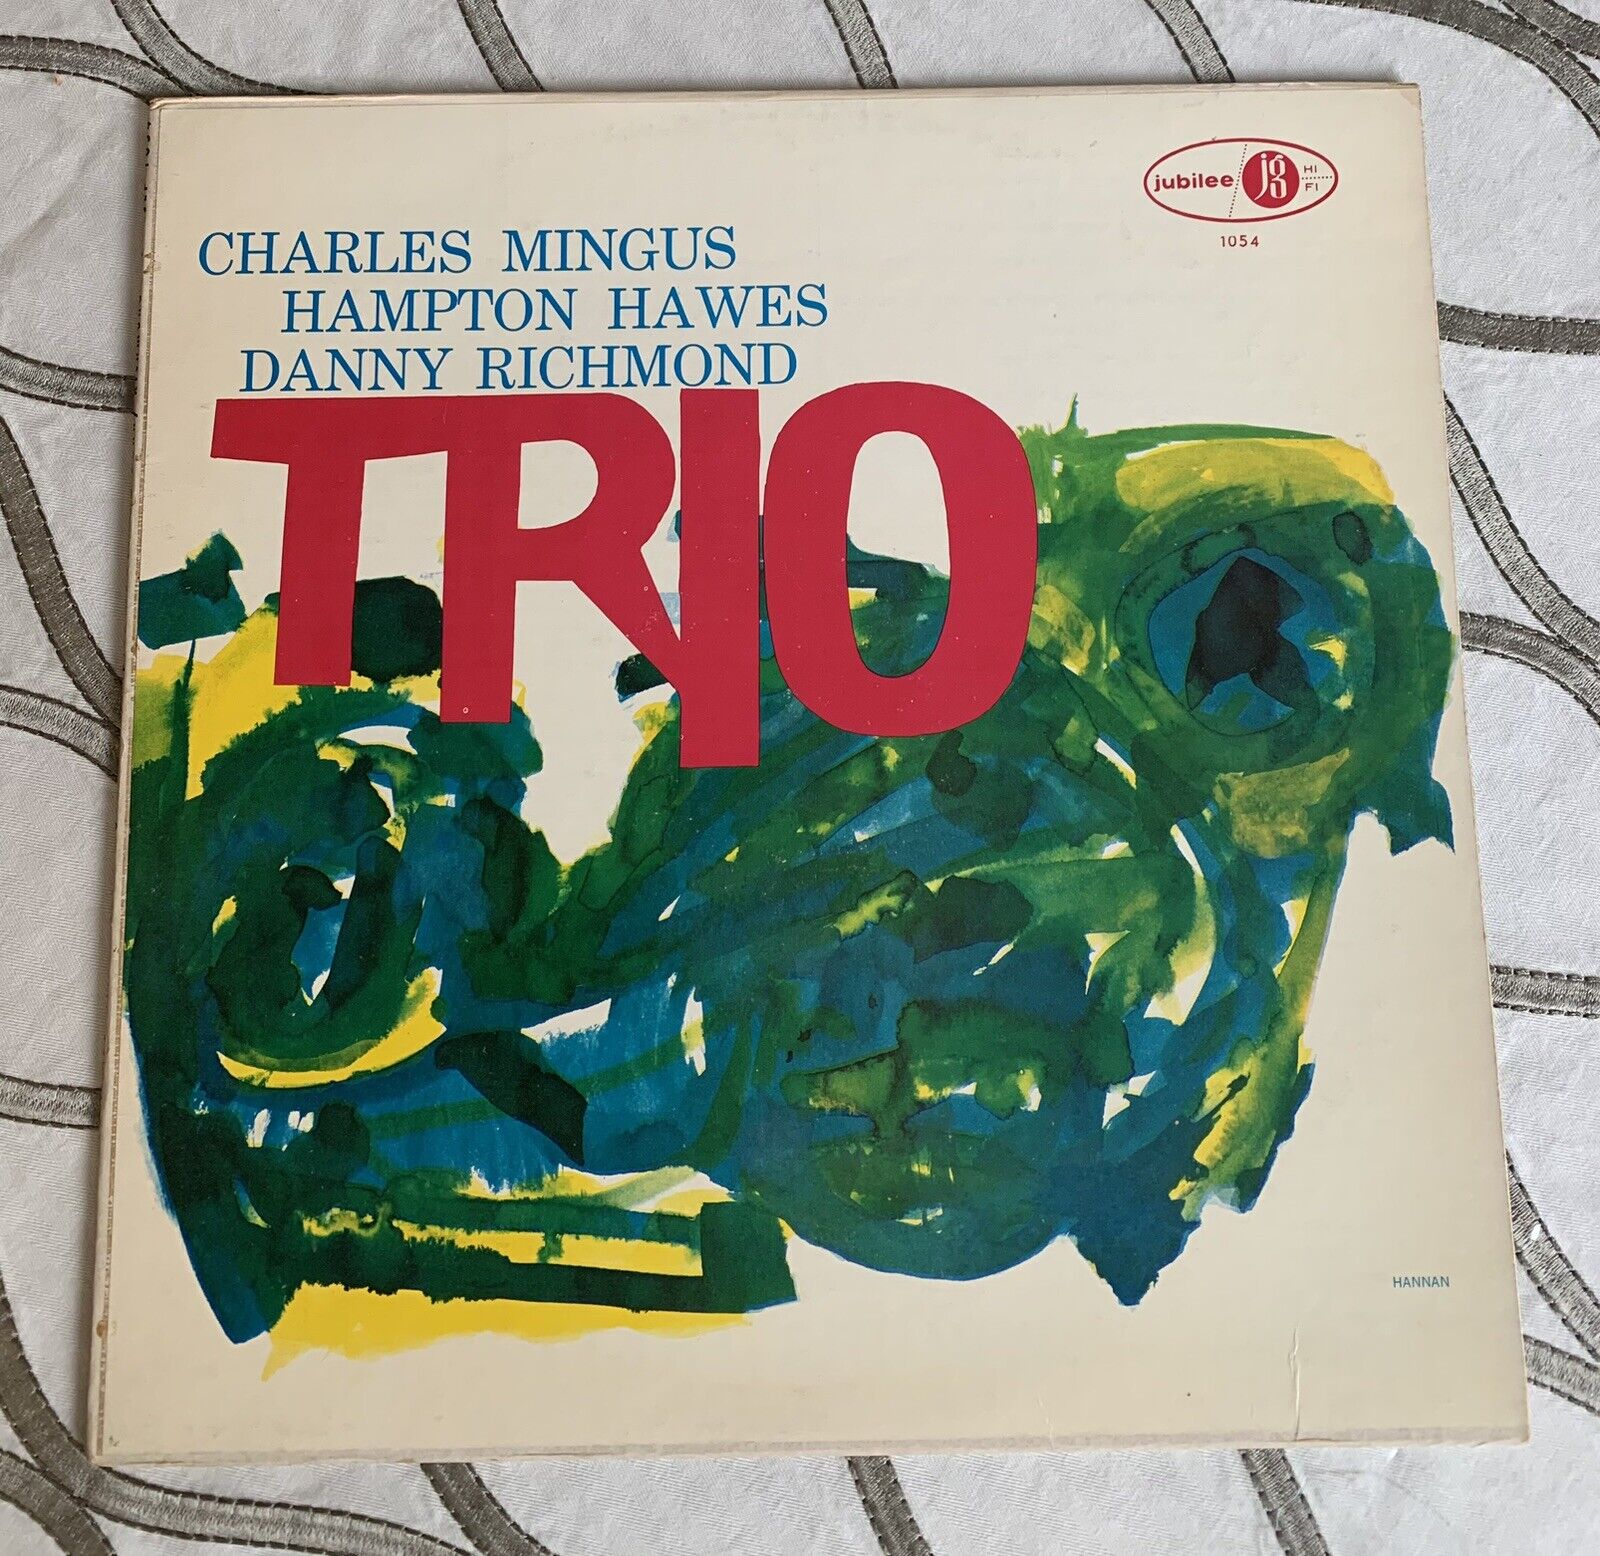 CHARLES MINGUS Trio 1959 Vinyl LP Album Jubilee 1054 JGM-1054-B BLACK LABEL VG+